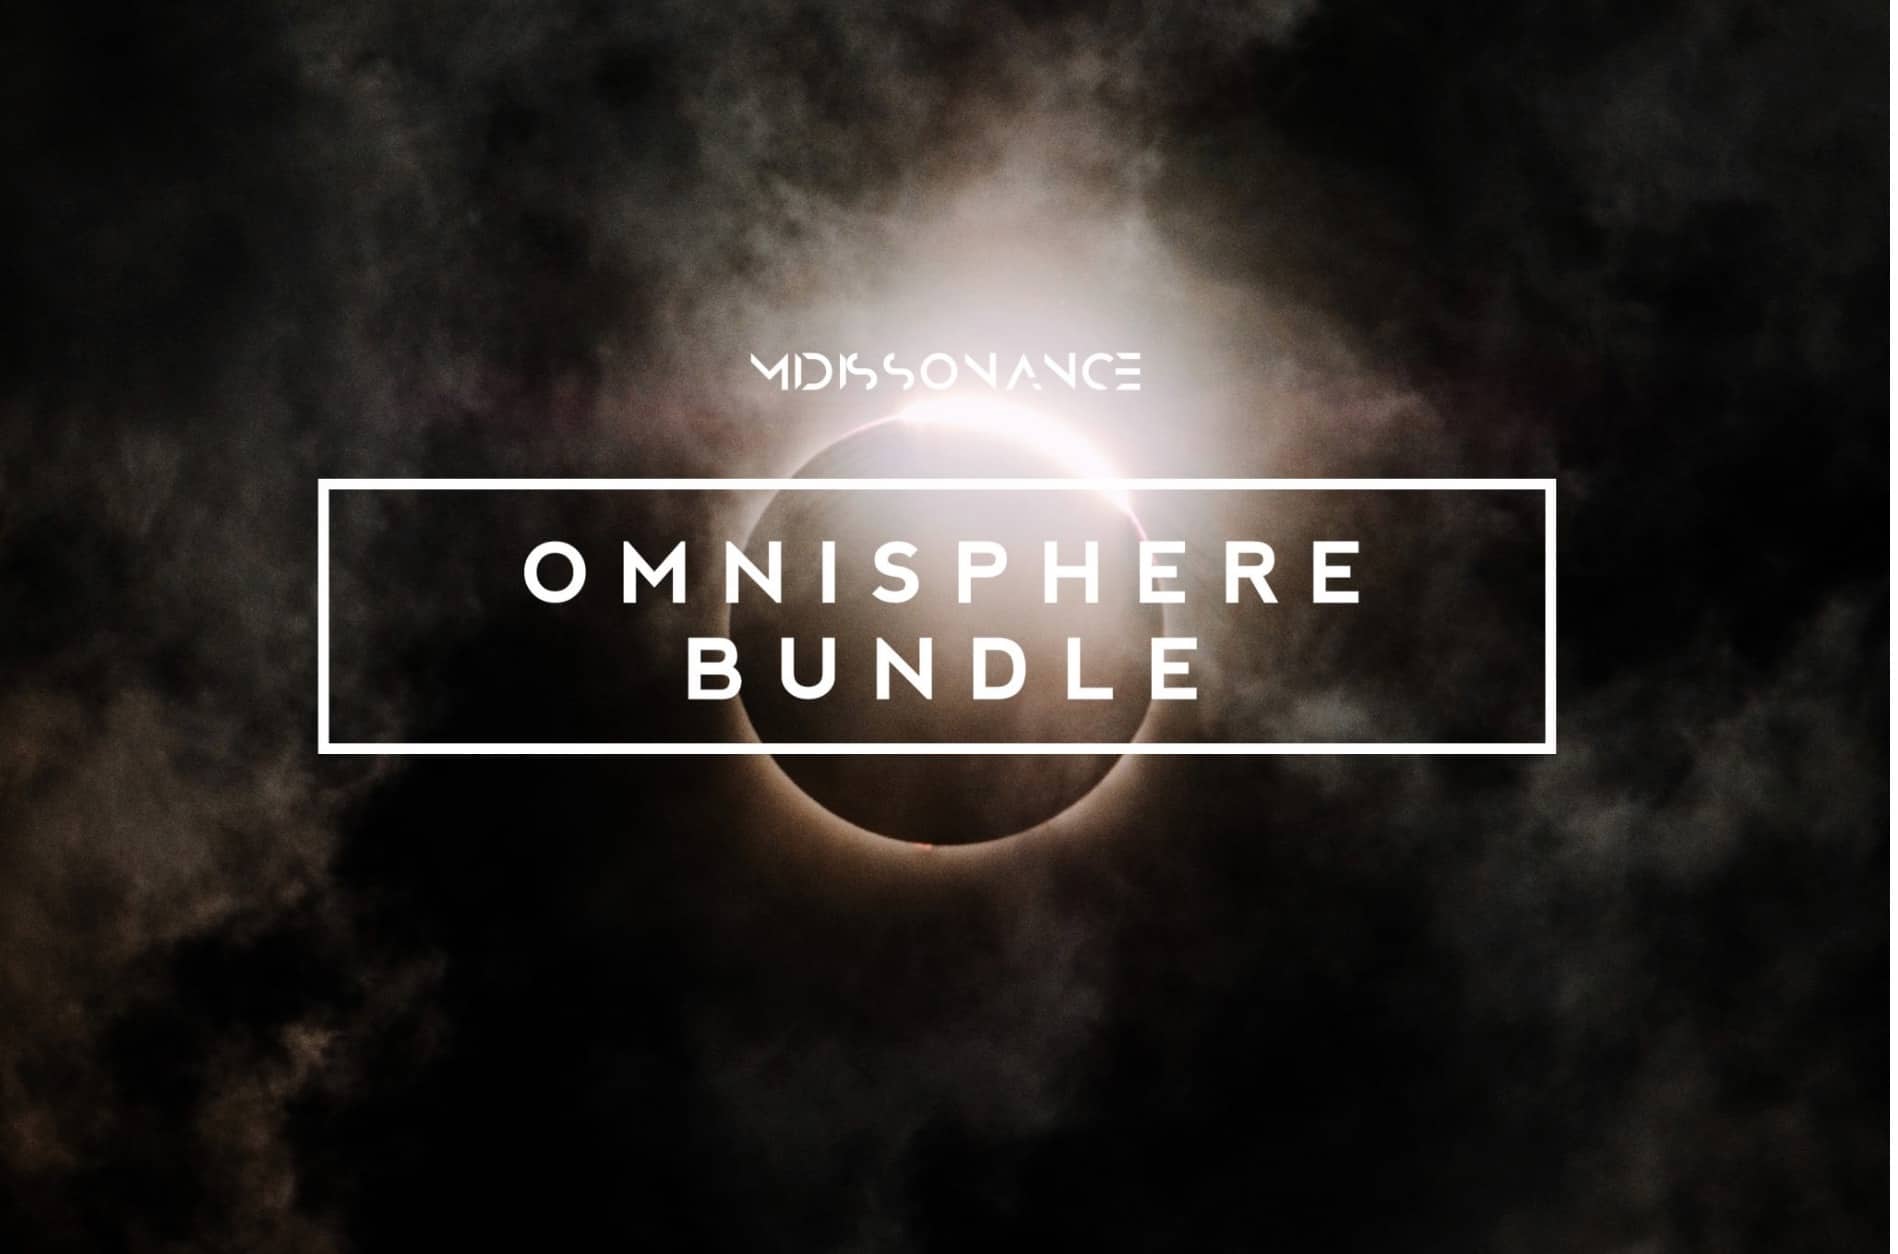 Omnisphere Bundle by MIDIssonance Review